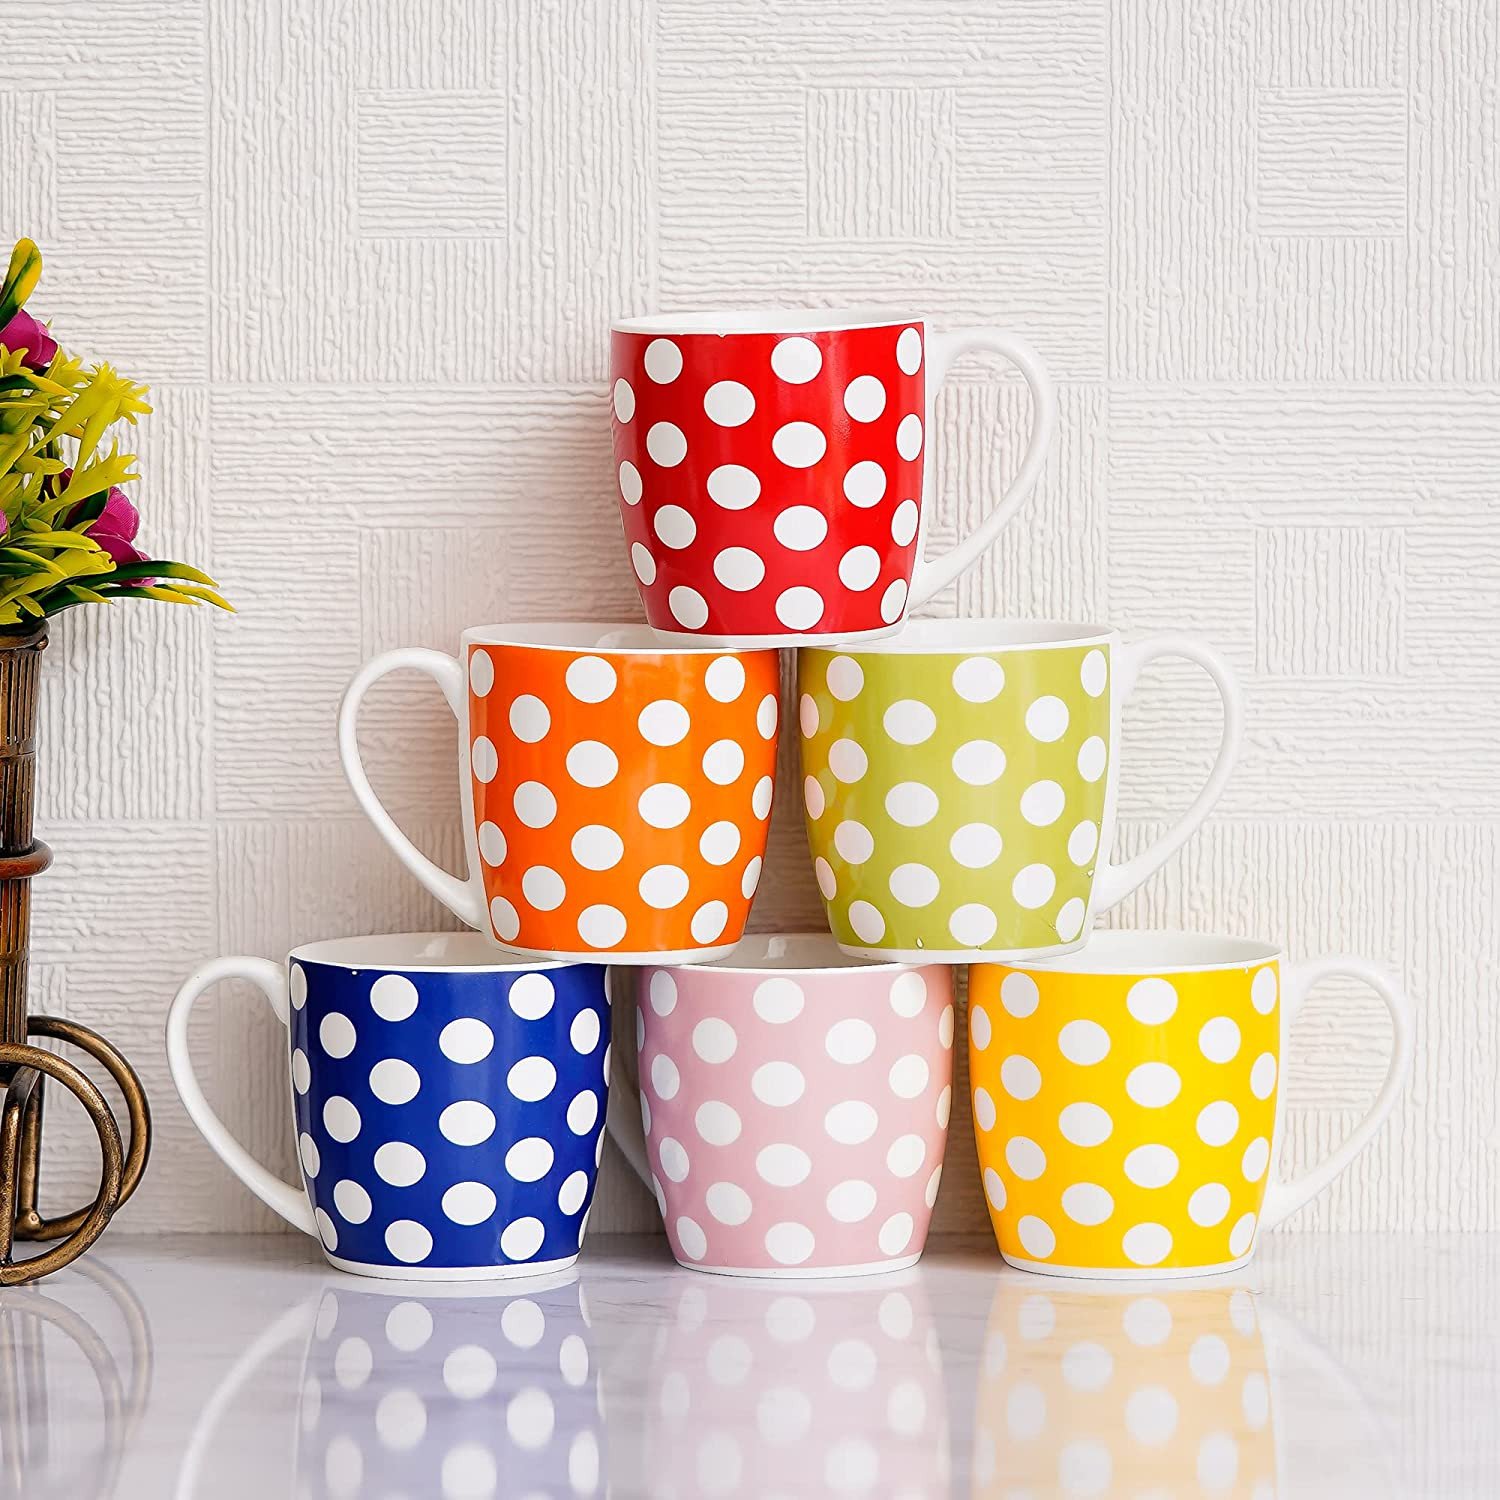 Indian Ceramic Multicolor Tea Cup - 6 Pcs- 160 ML